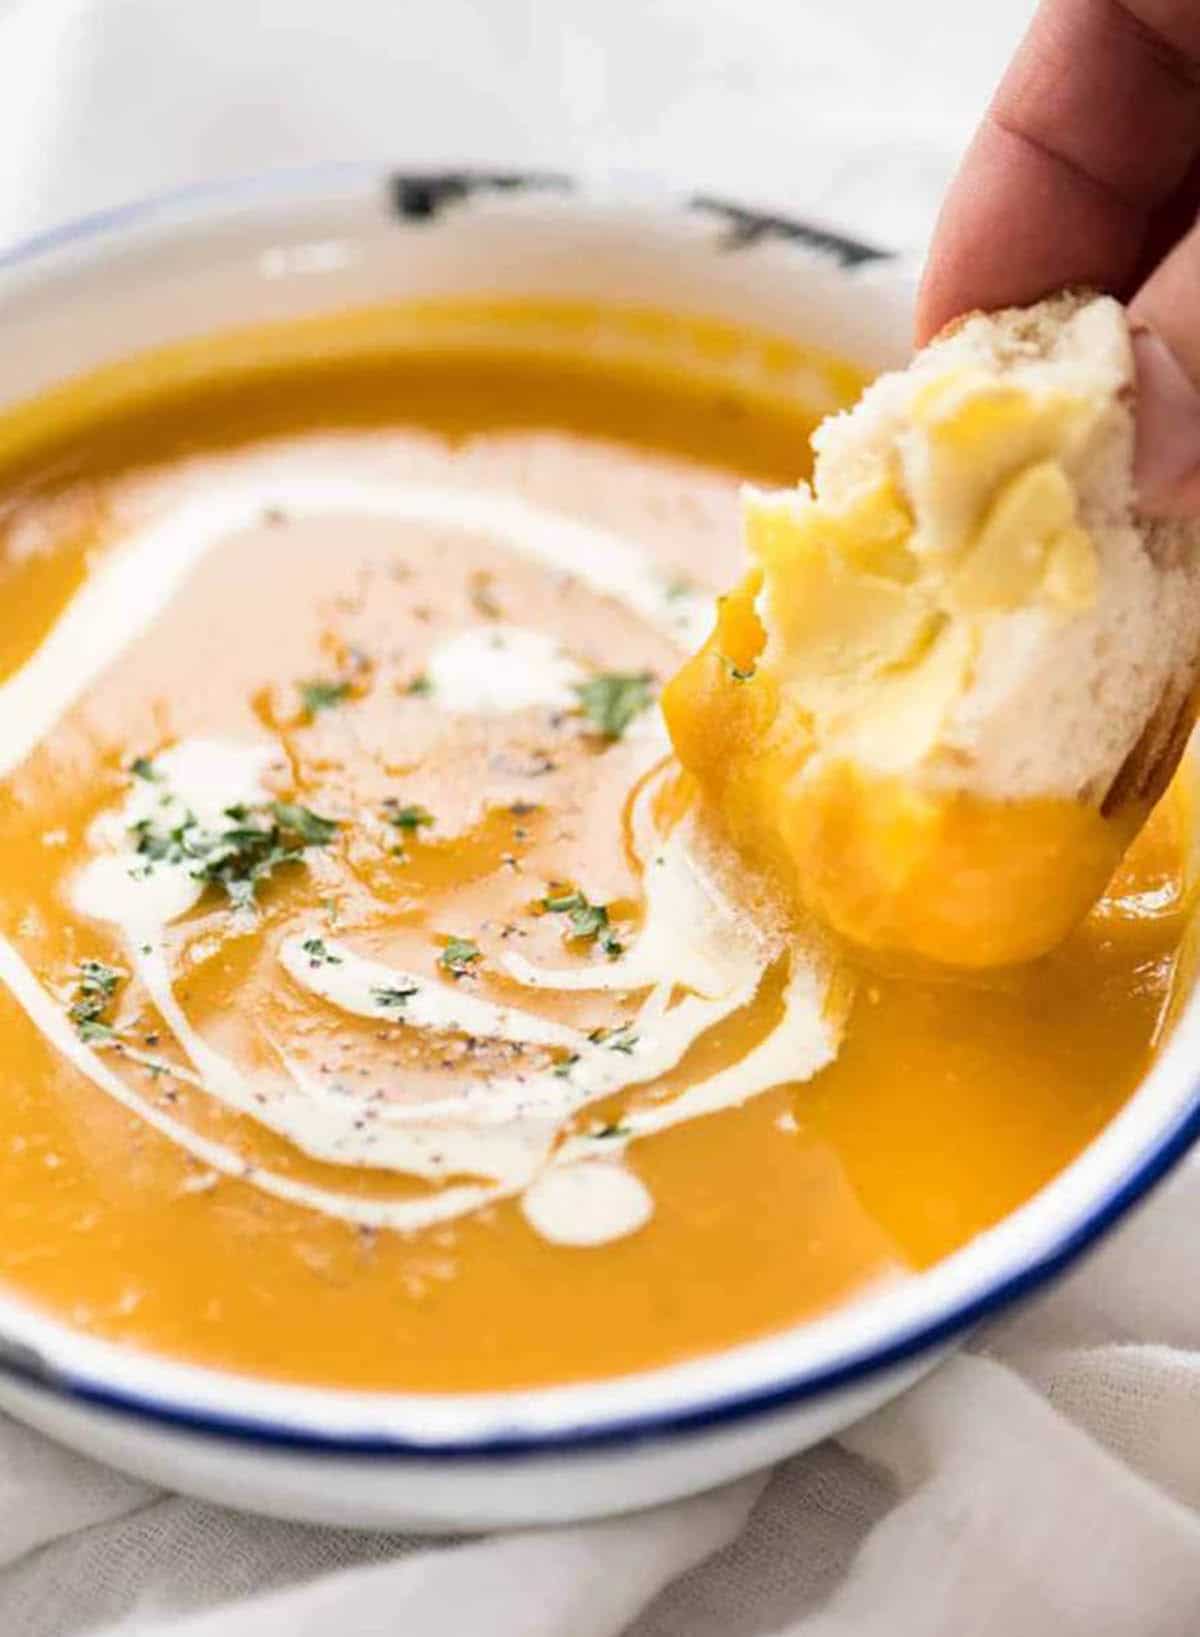 Classic Pumpkin Soup made with onion, garlic, milk/half and half cream, stock/broth, and pumpkin or pumpkin puree.